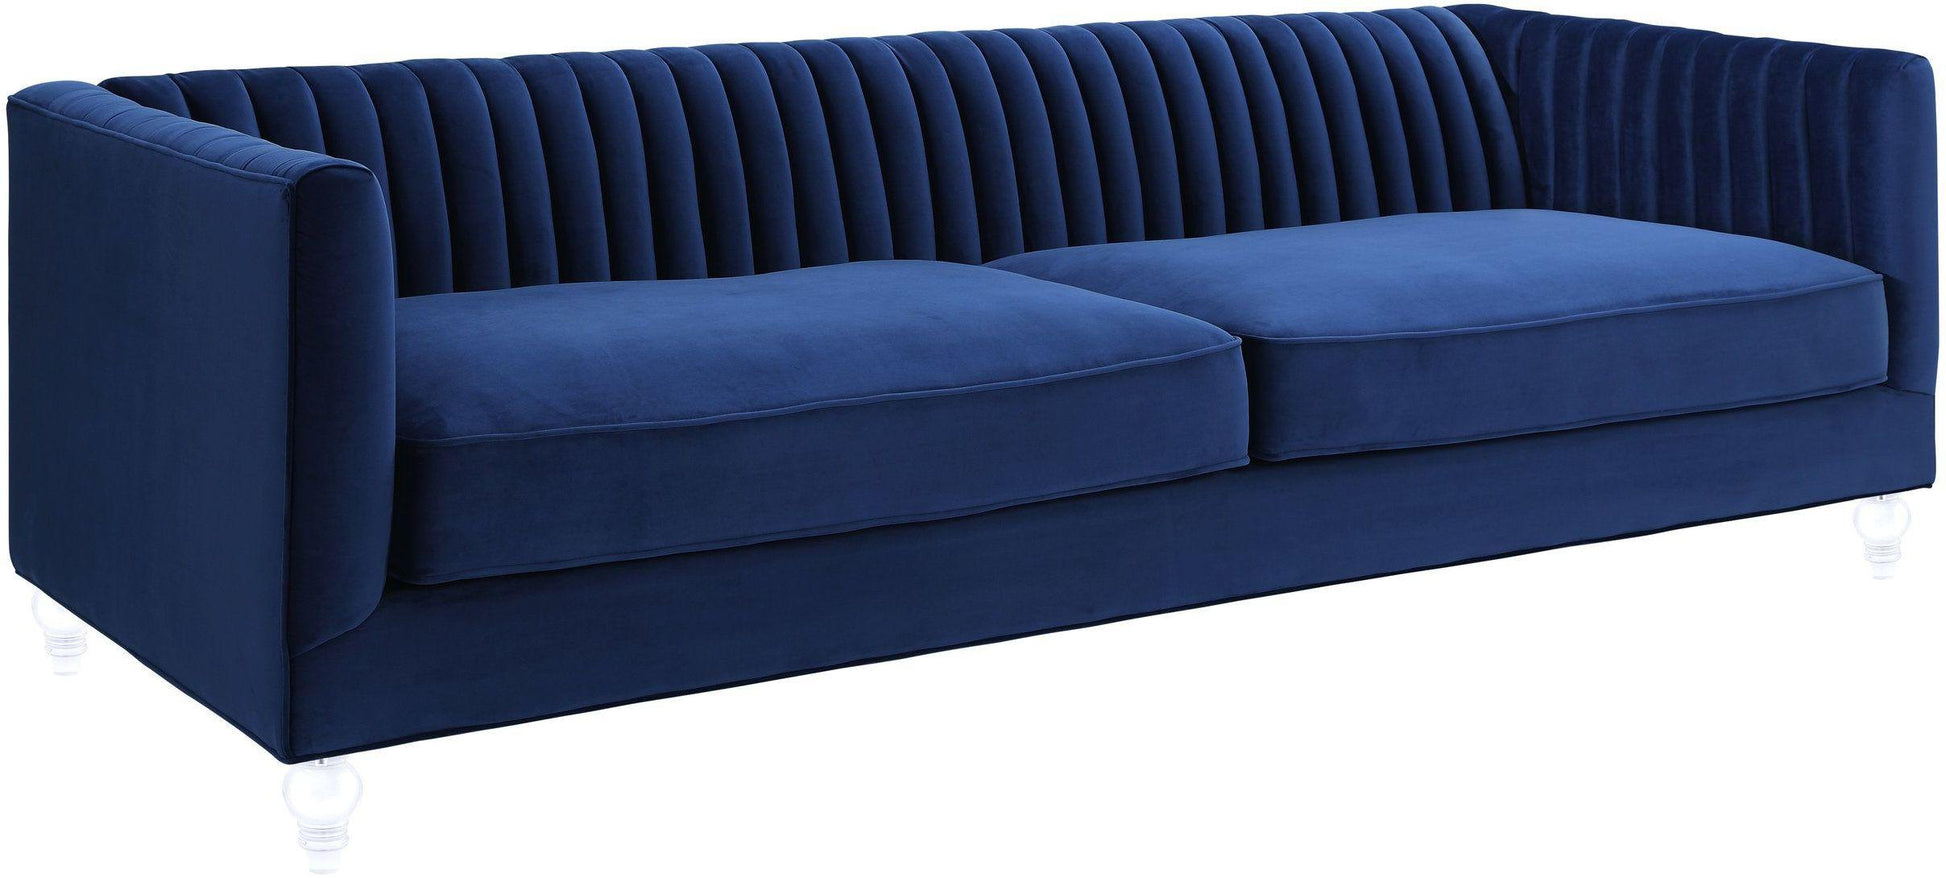 Tov Furniture Aviator Navy Velvet Sofa